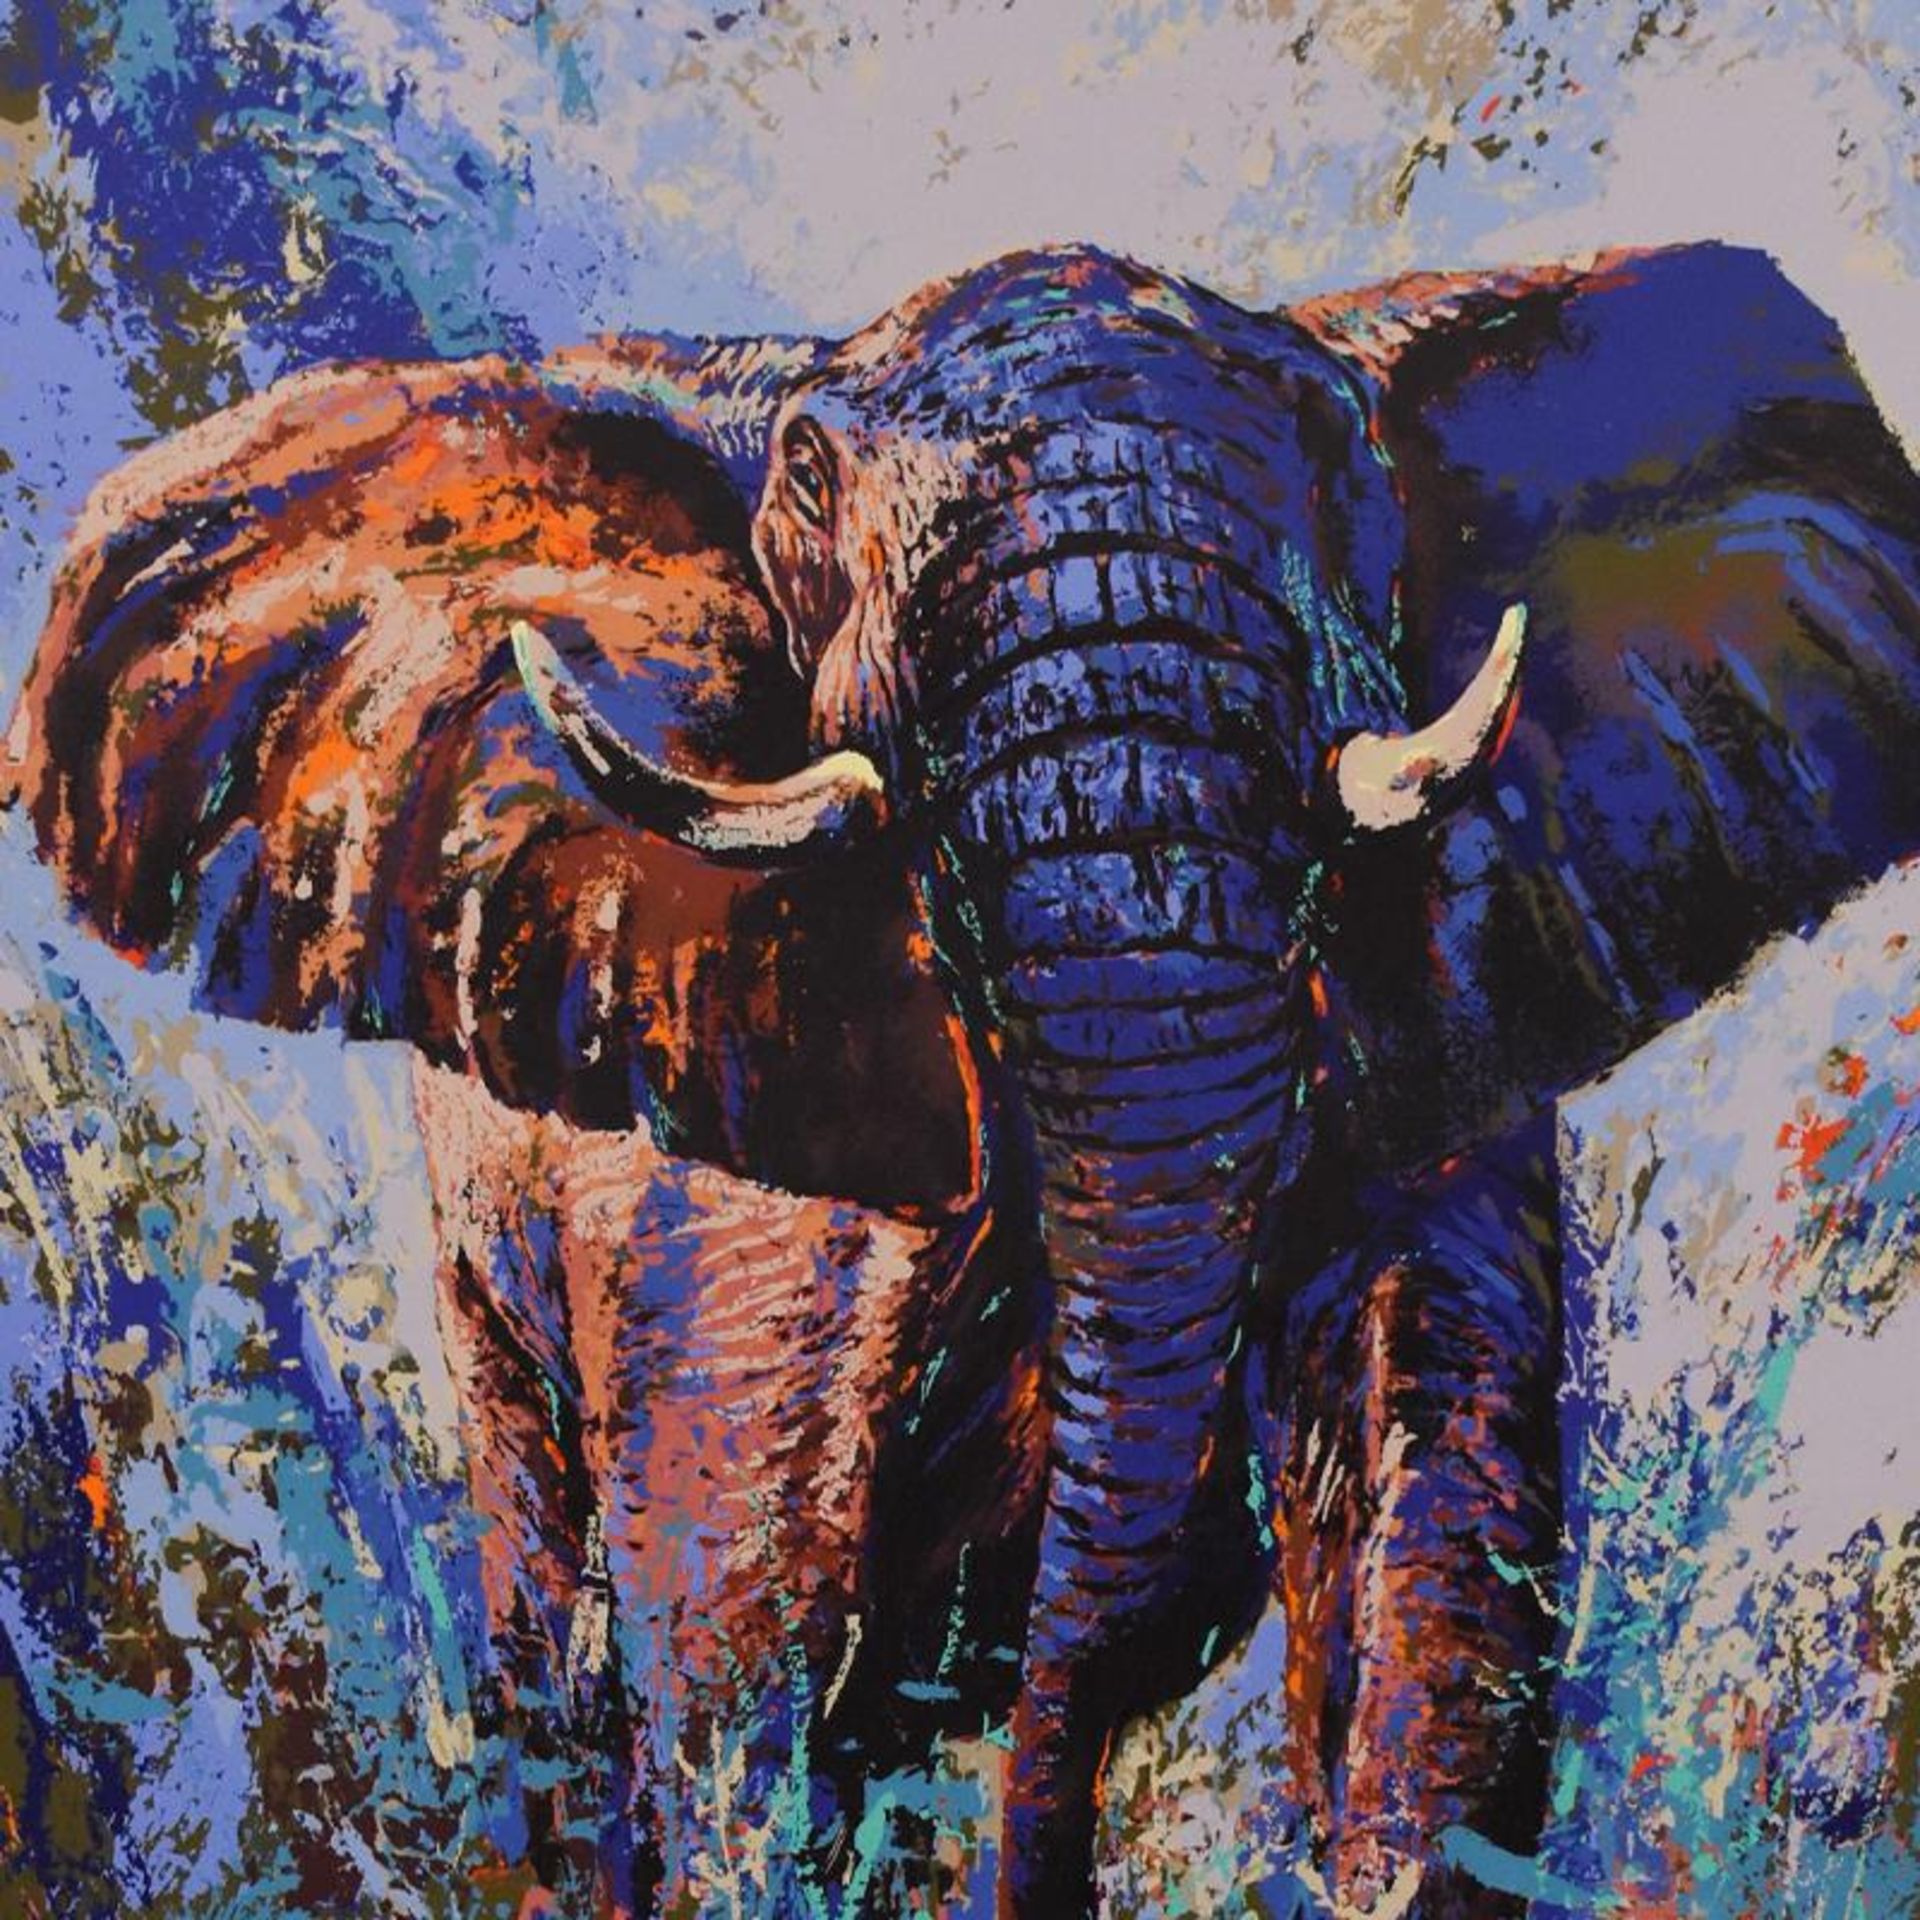 Tembo Elephant by Mark King (1931-2014) - Image 3 of 3